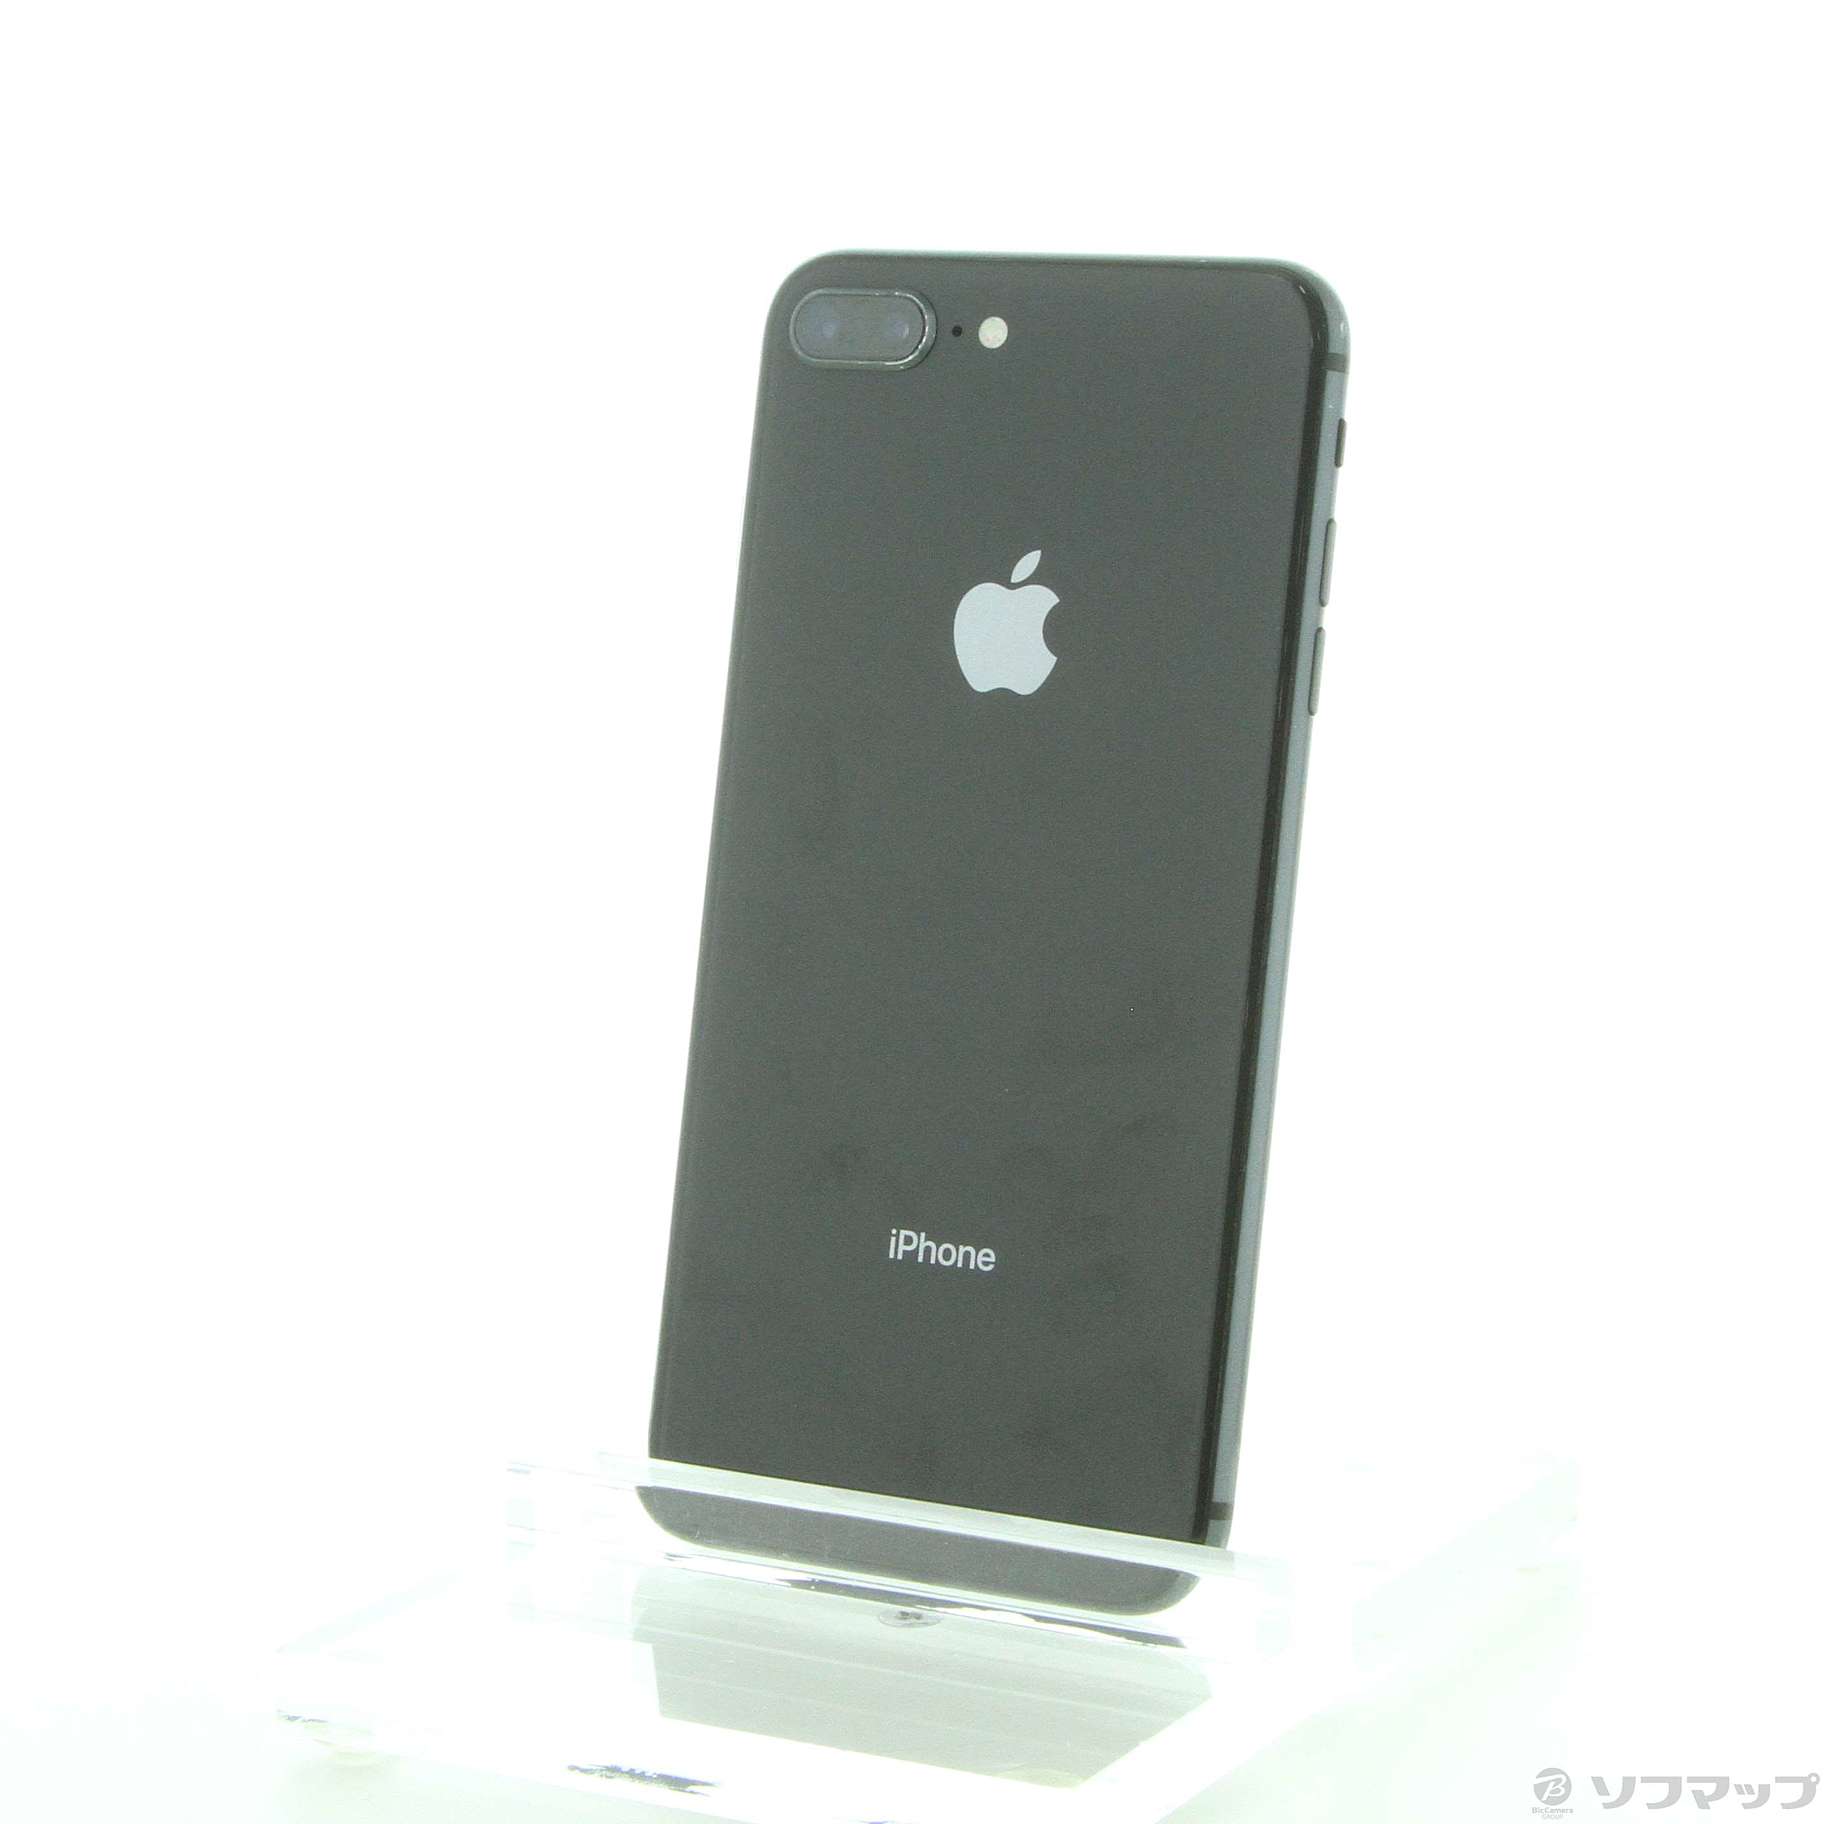 Appleのiphone8 plus 256GB スペースグレー - www.sorbillomenu.com